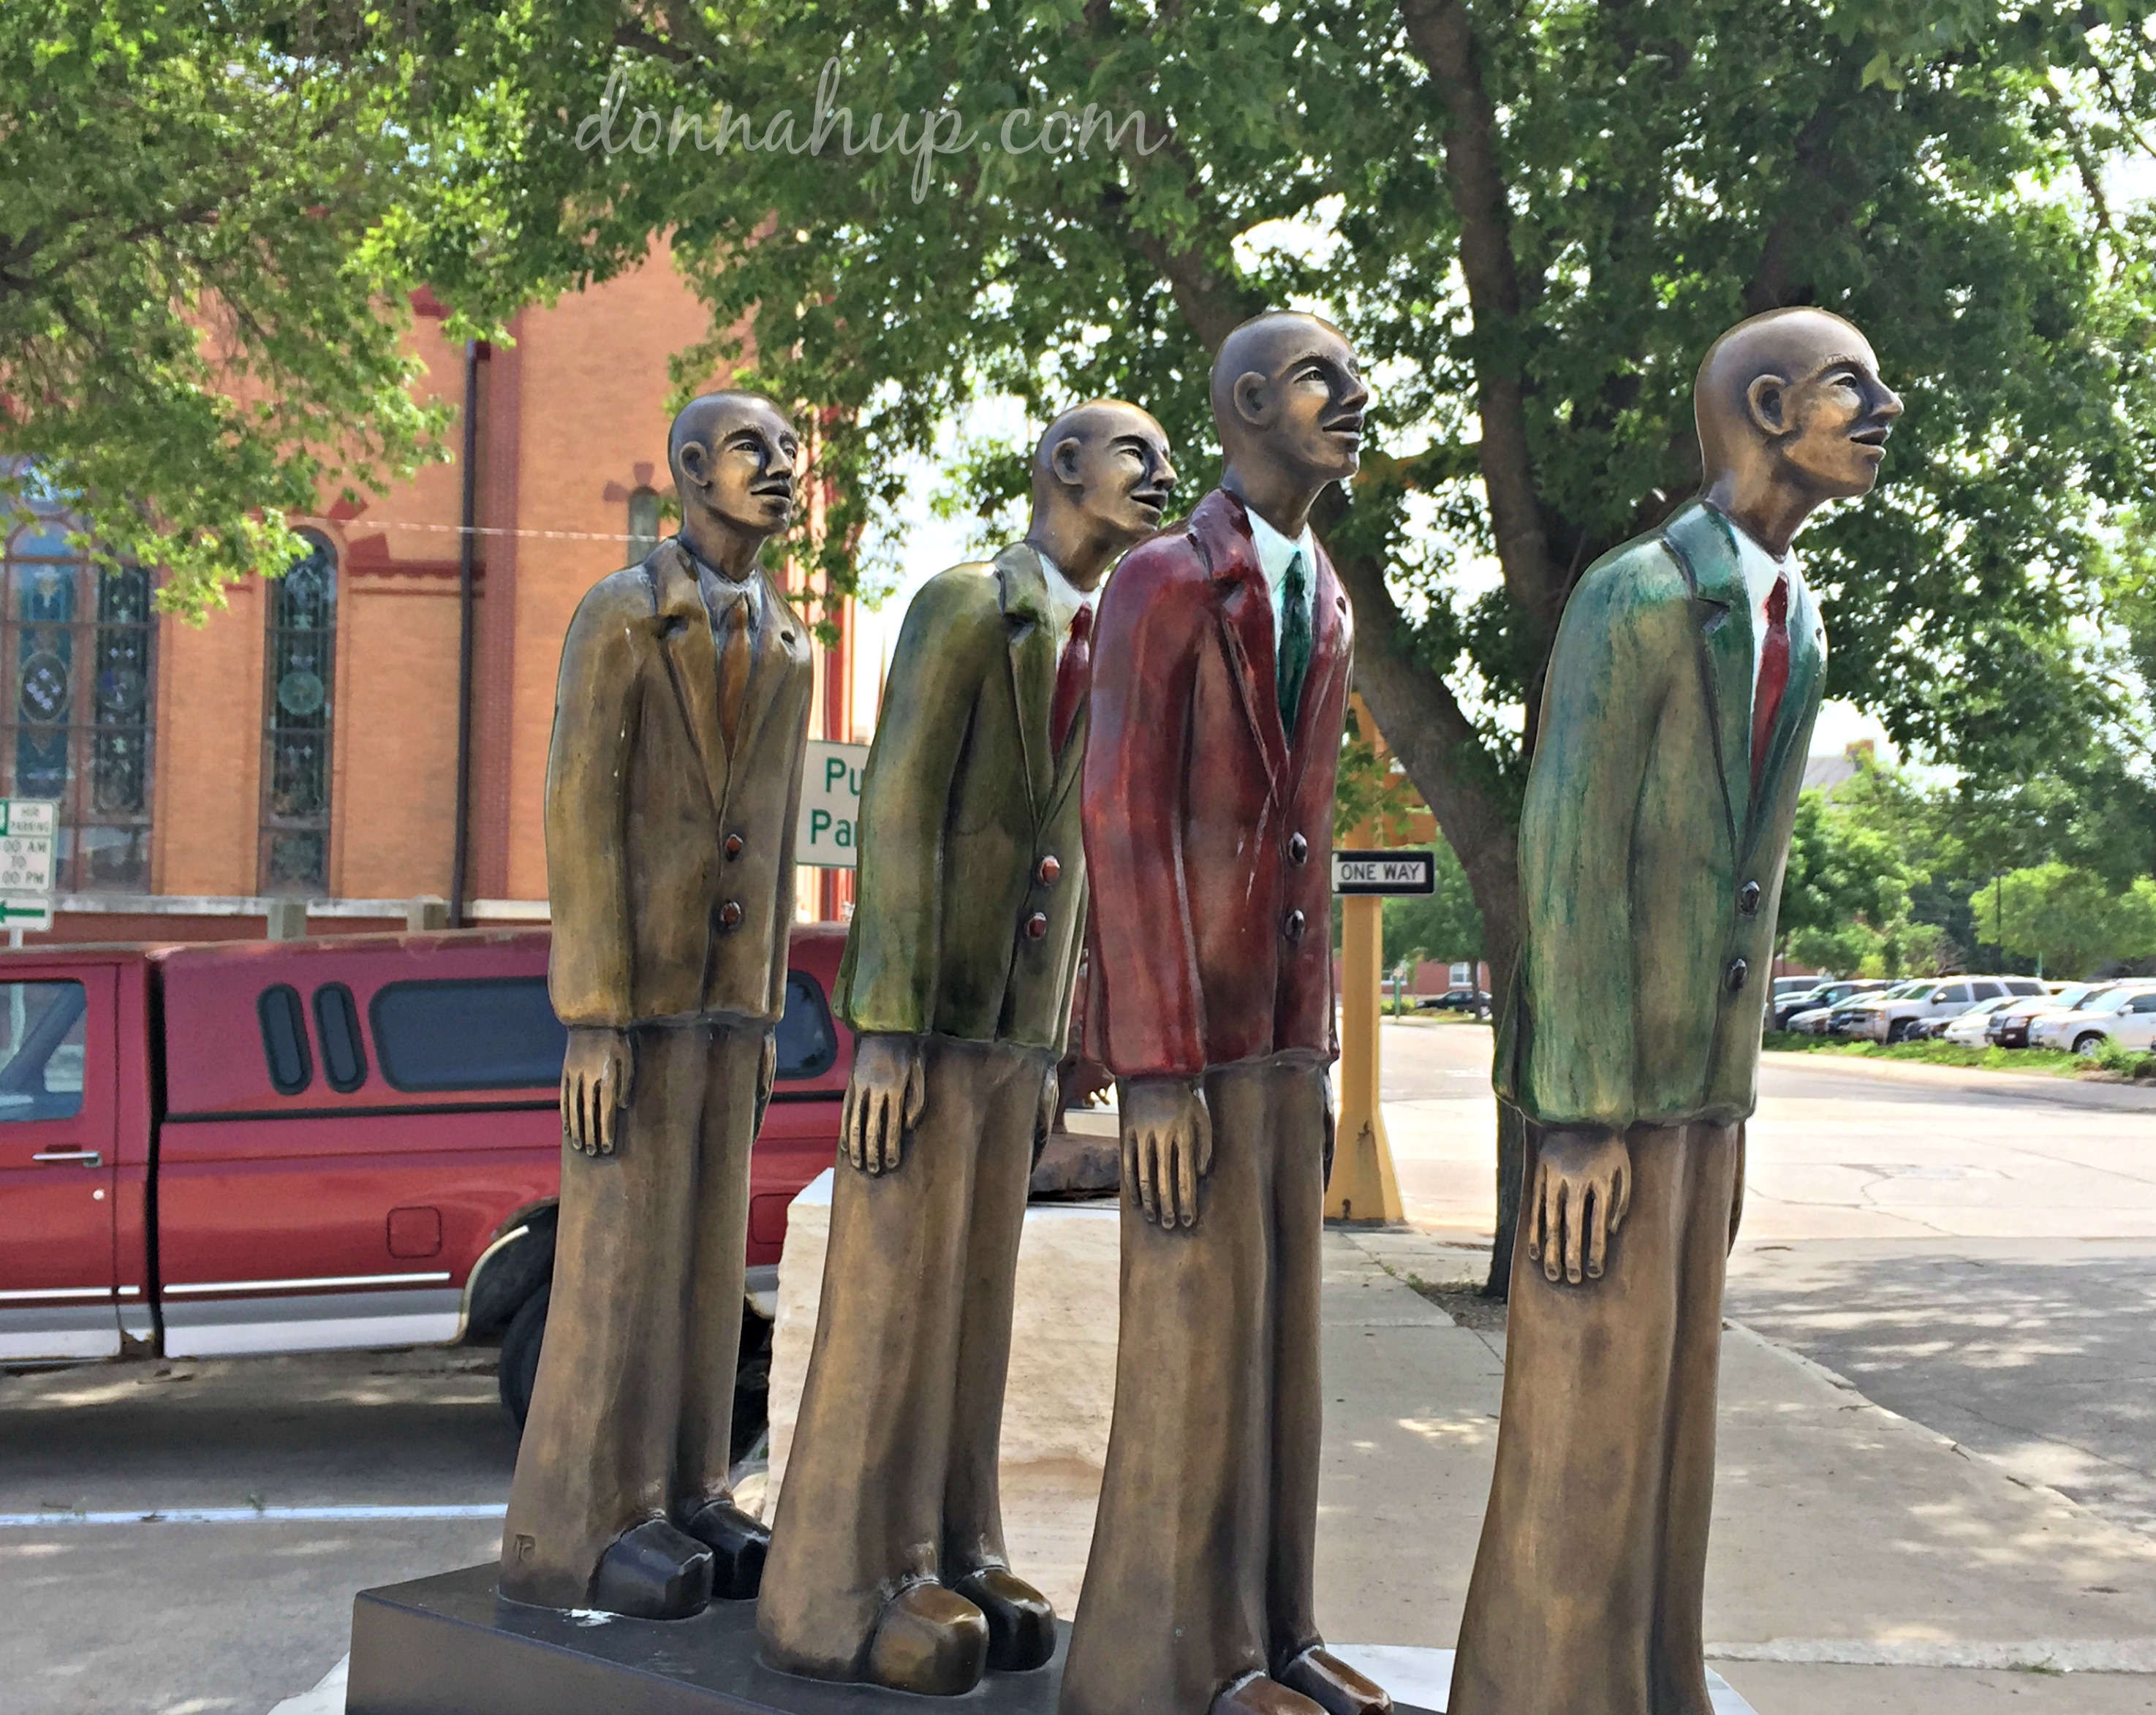 The Mason City Sculpture Walk